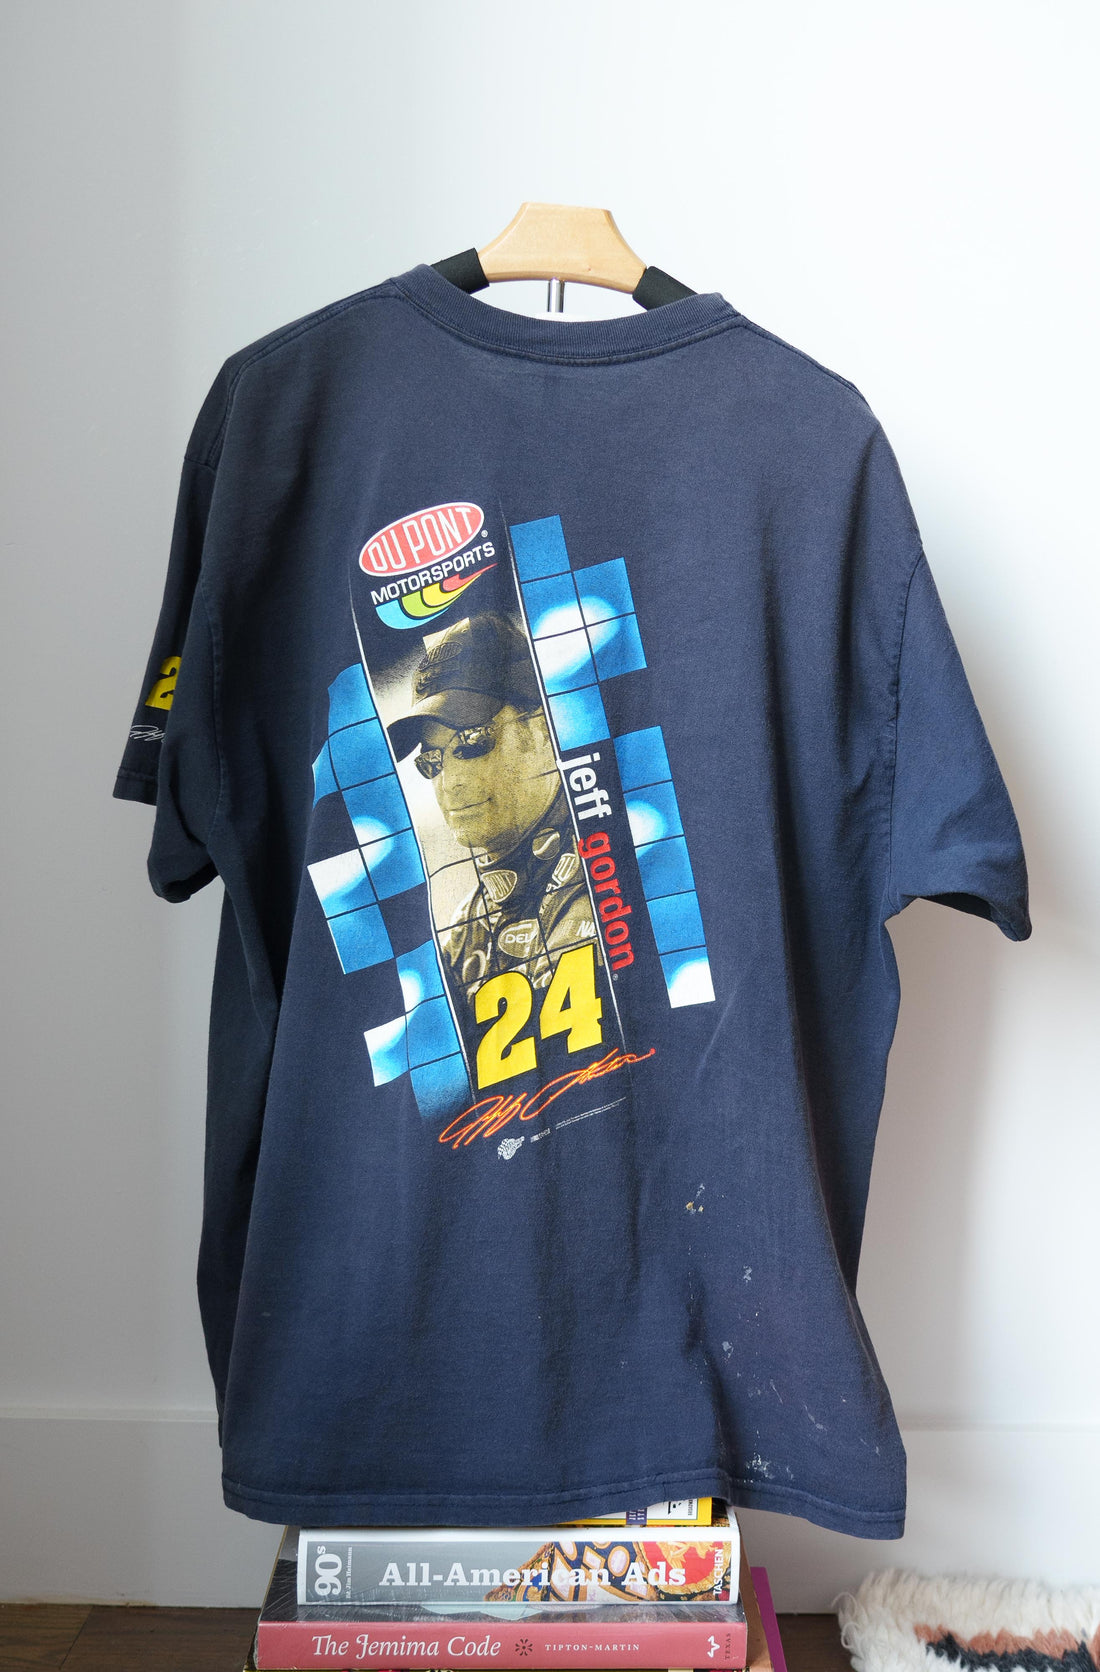 Vintage Jeff Gordan T-Shirt | Rare Finds